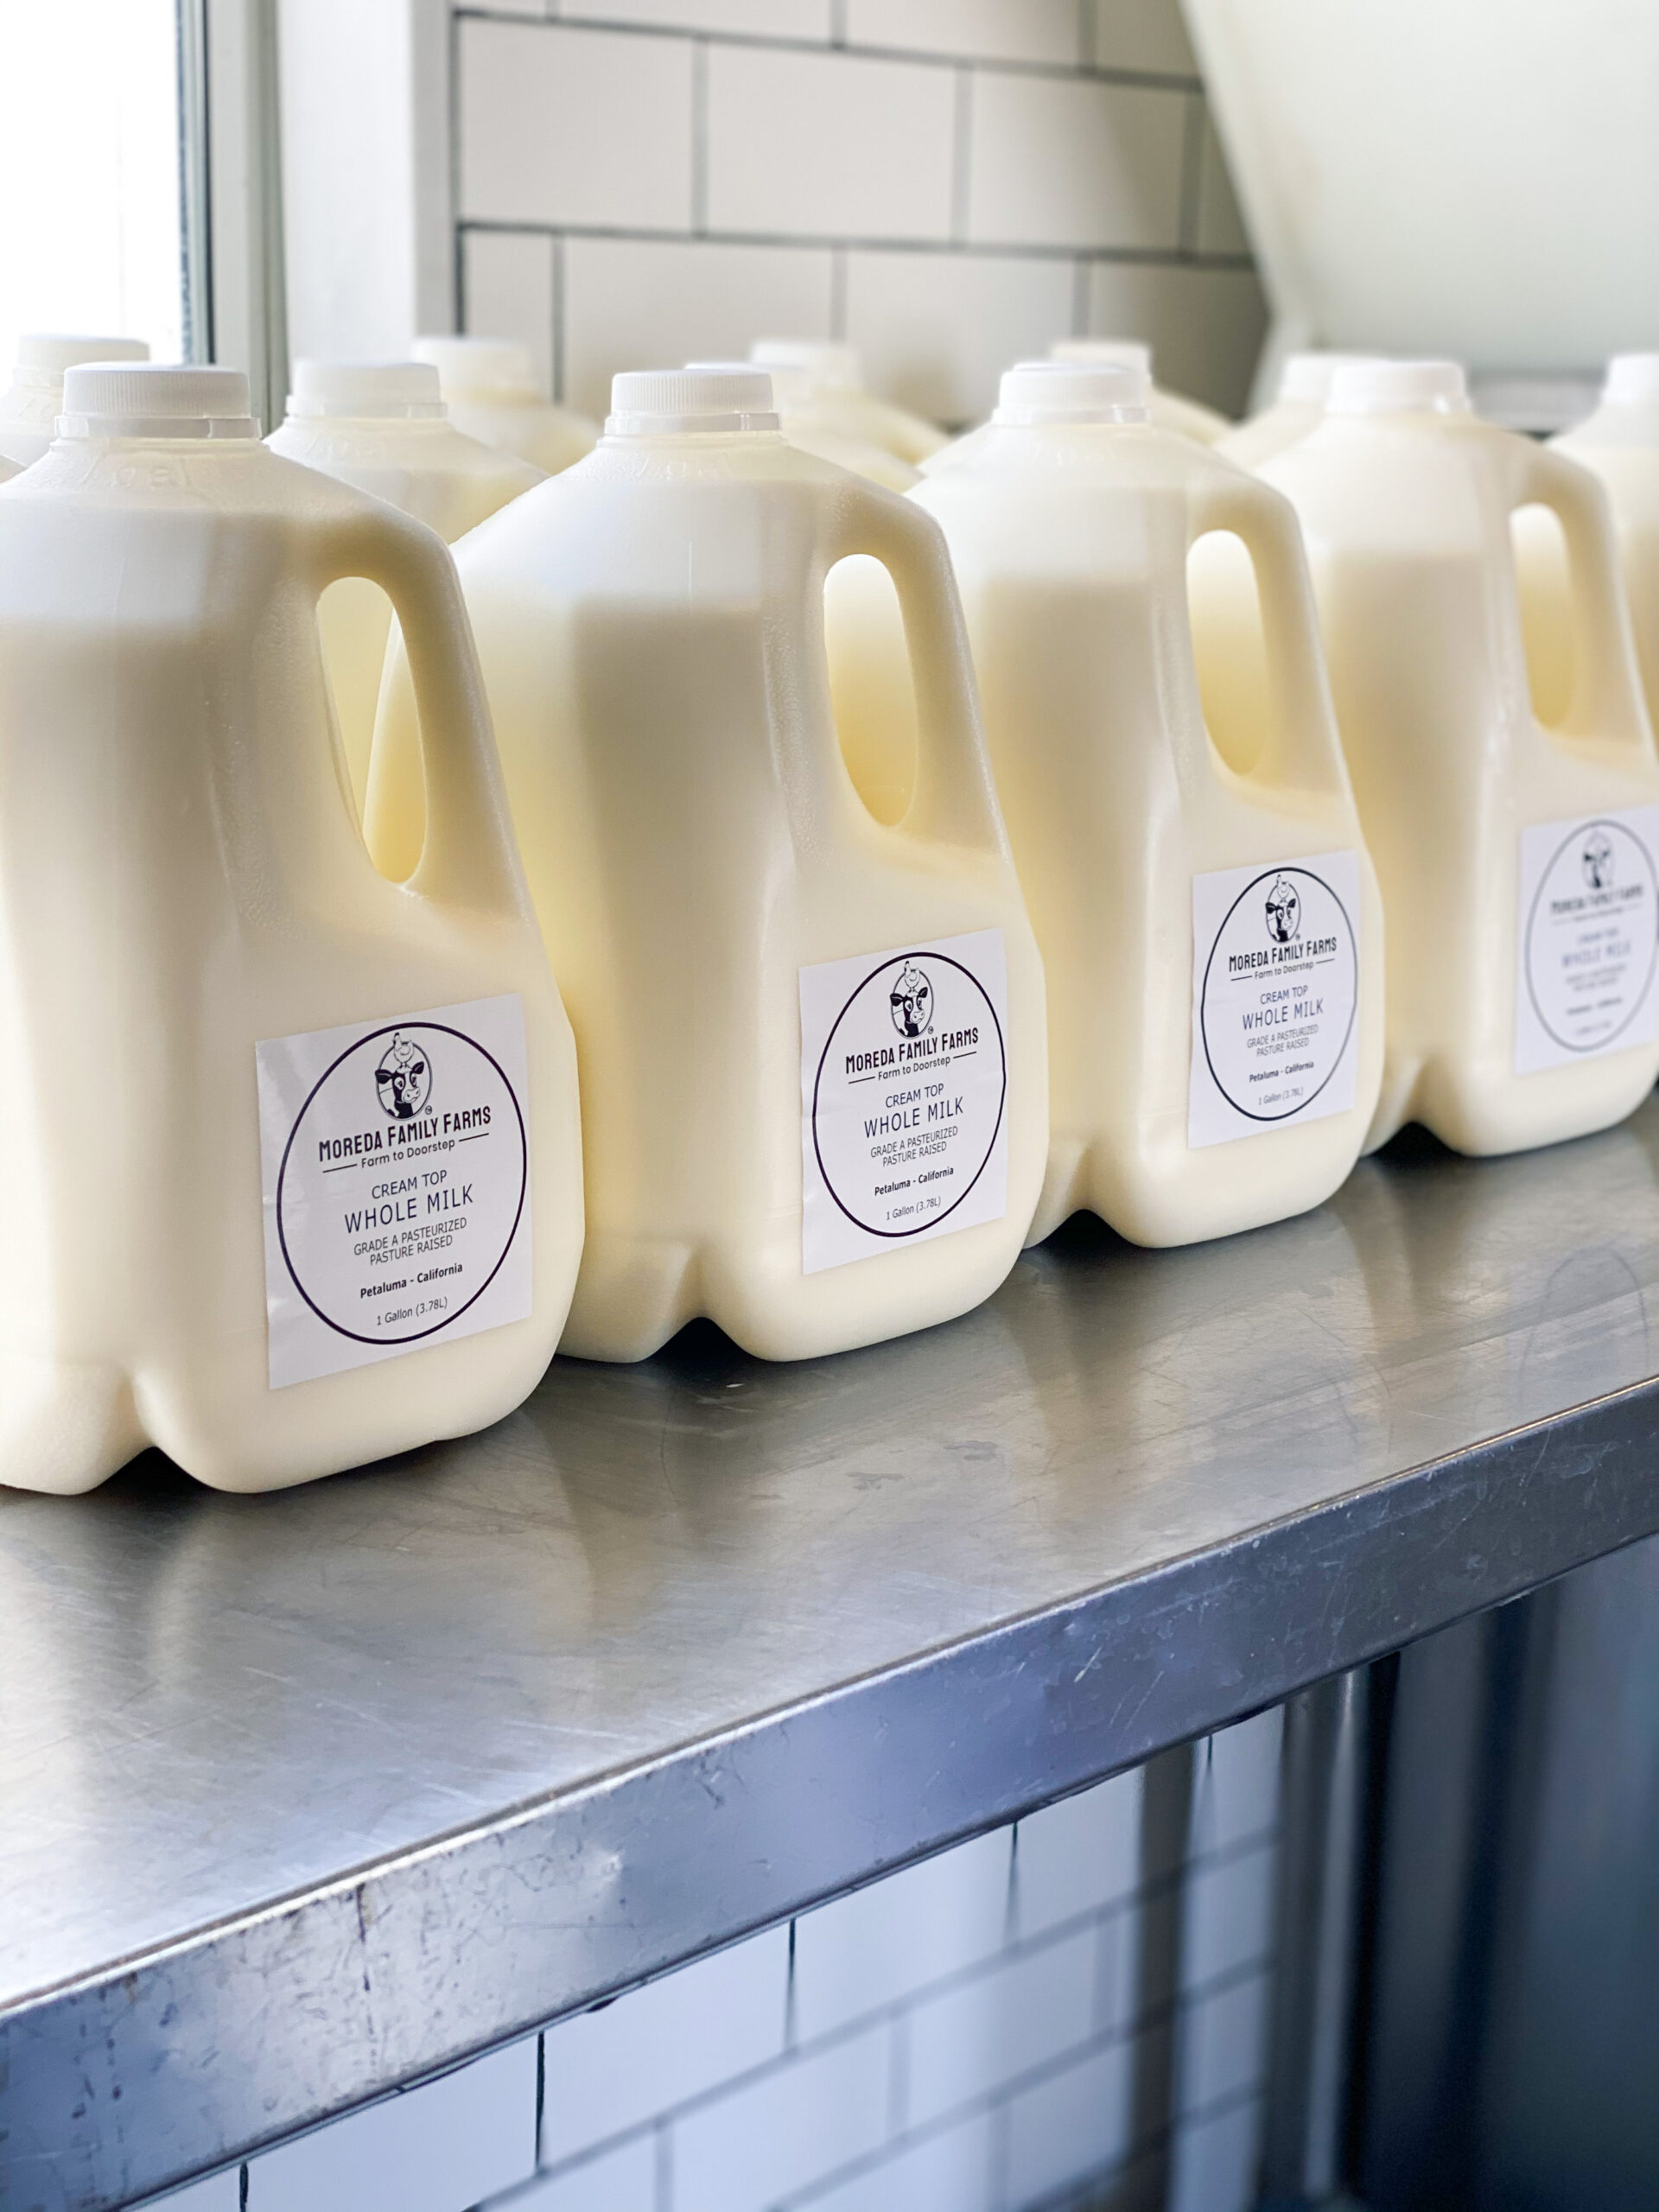 FARM STORE PICK UP: Gallon Raw Milk